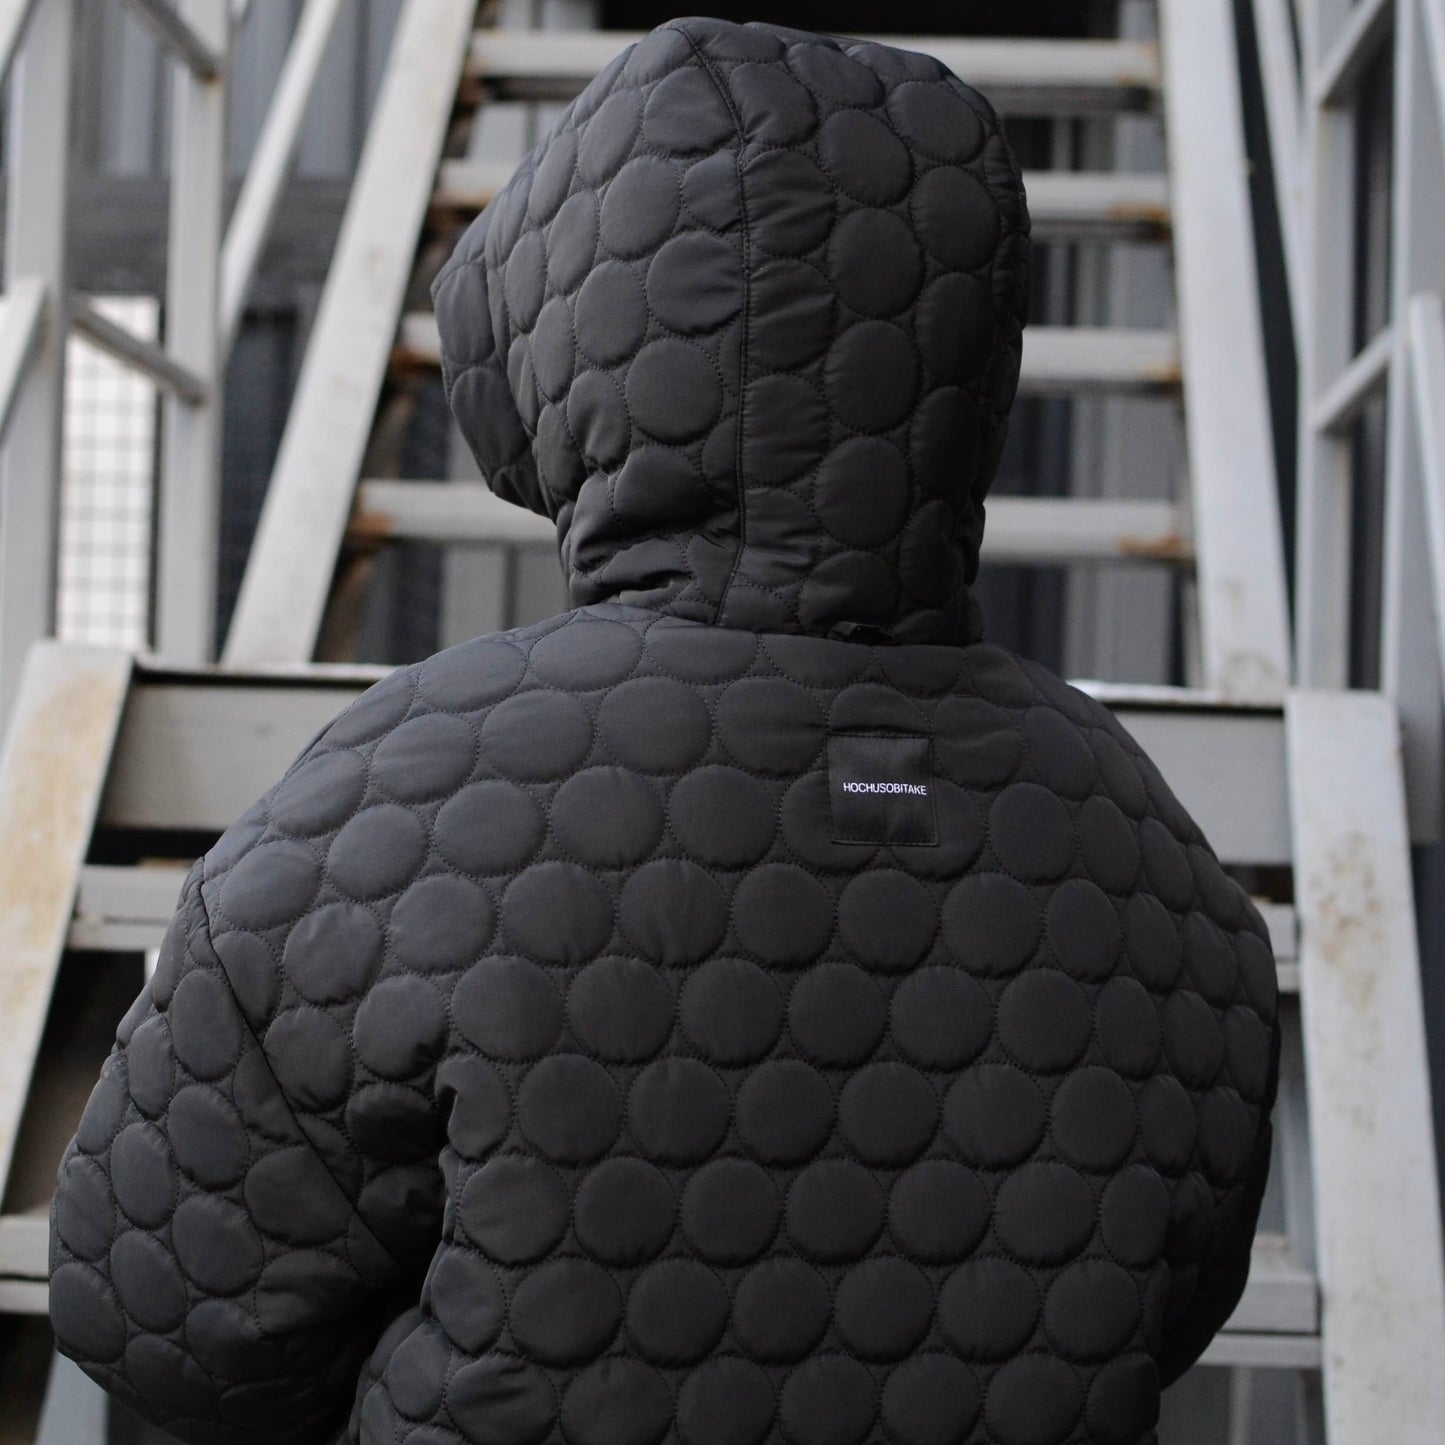 Winter double-sided jacket marsala/black